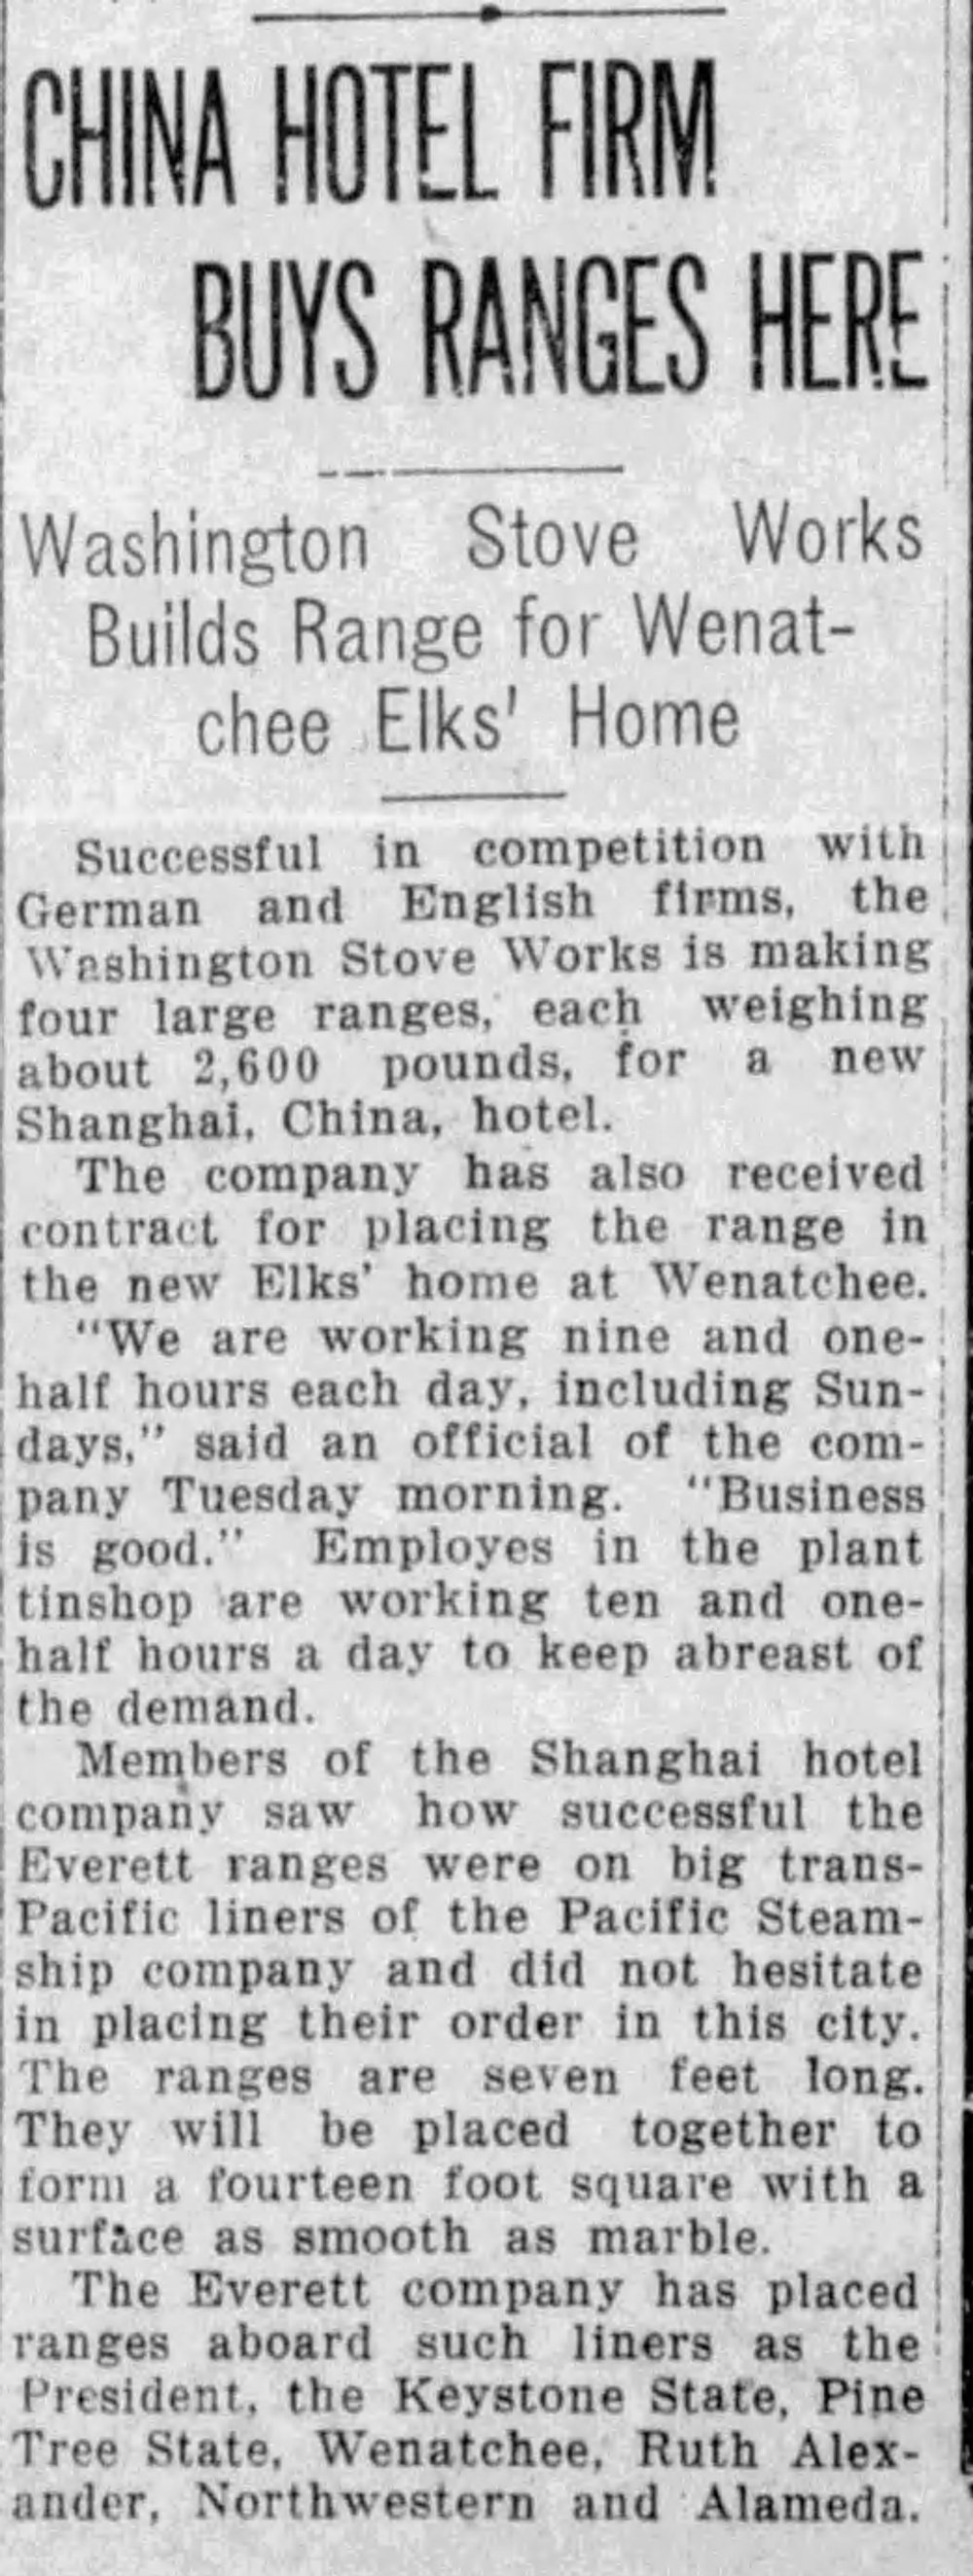  From 1932 Everett Herald article, provided by historian Steve Fox. 